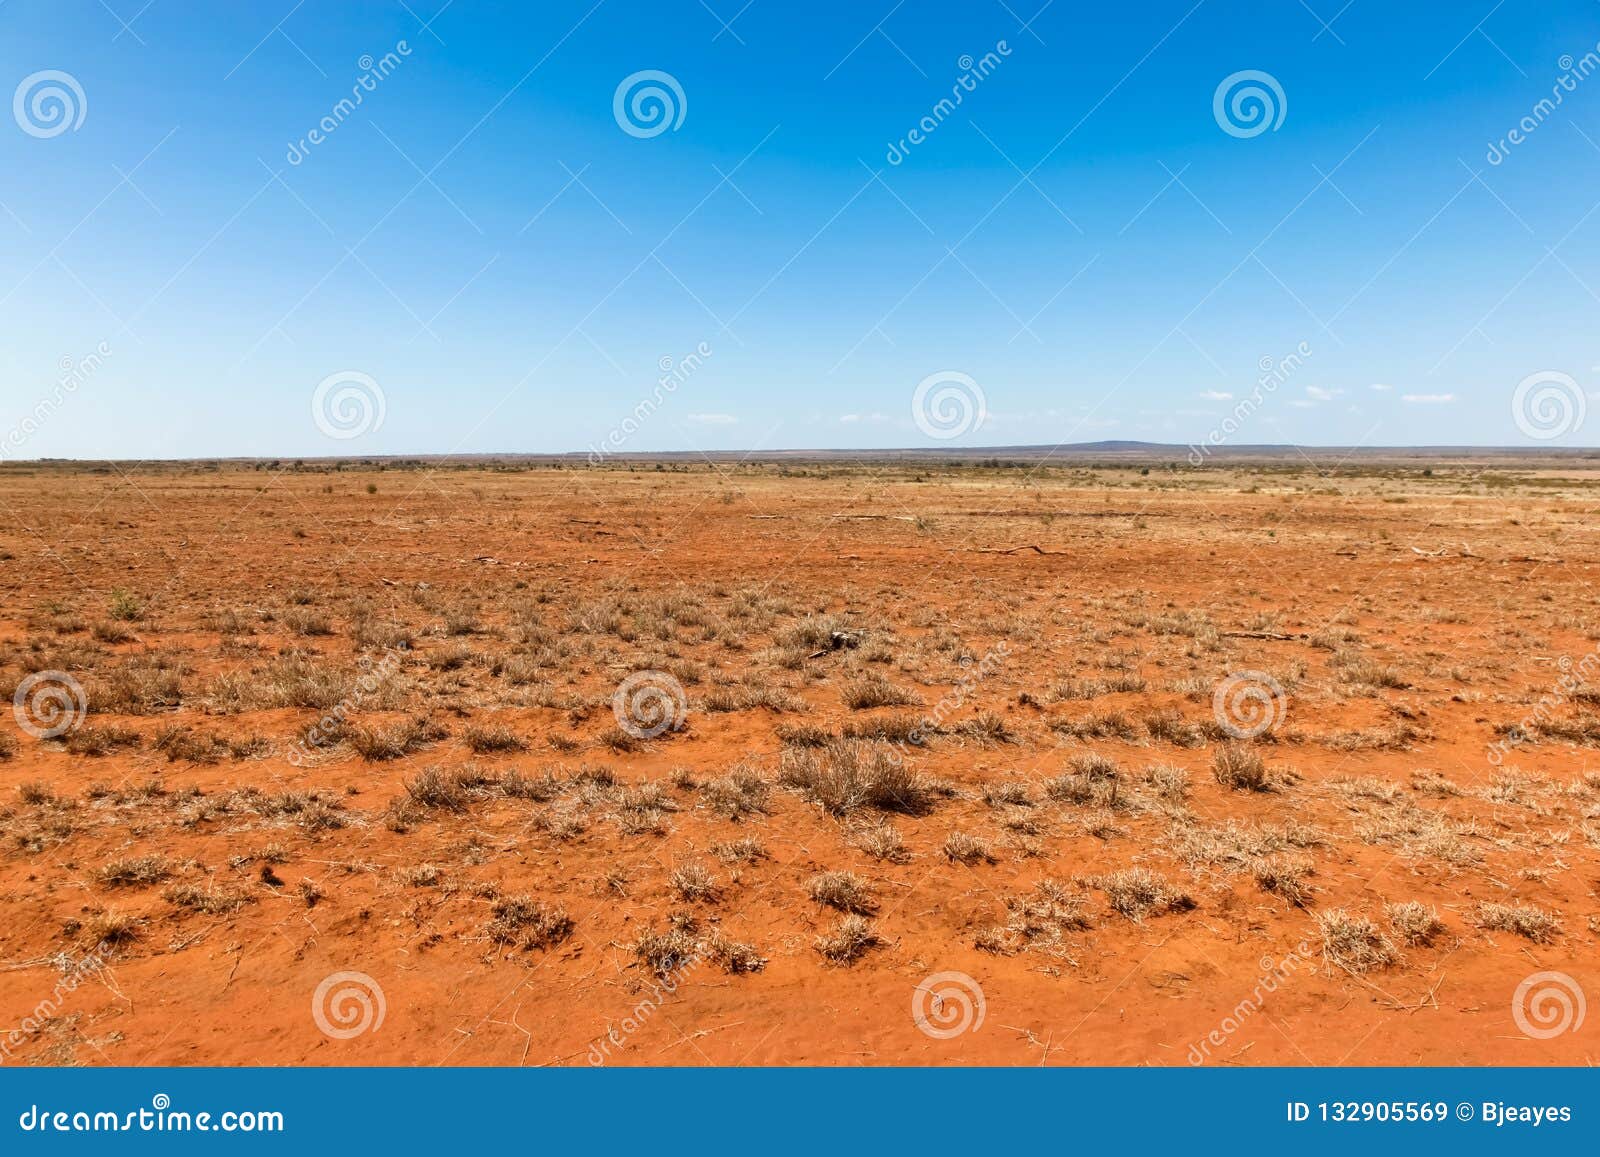 Central Queensland Arid Land Queensland Australia Stock Image Image